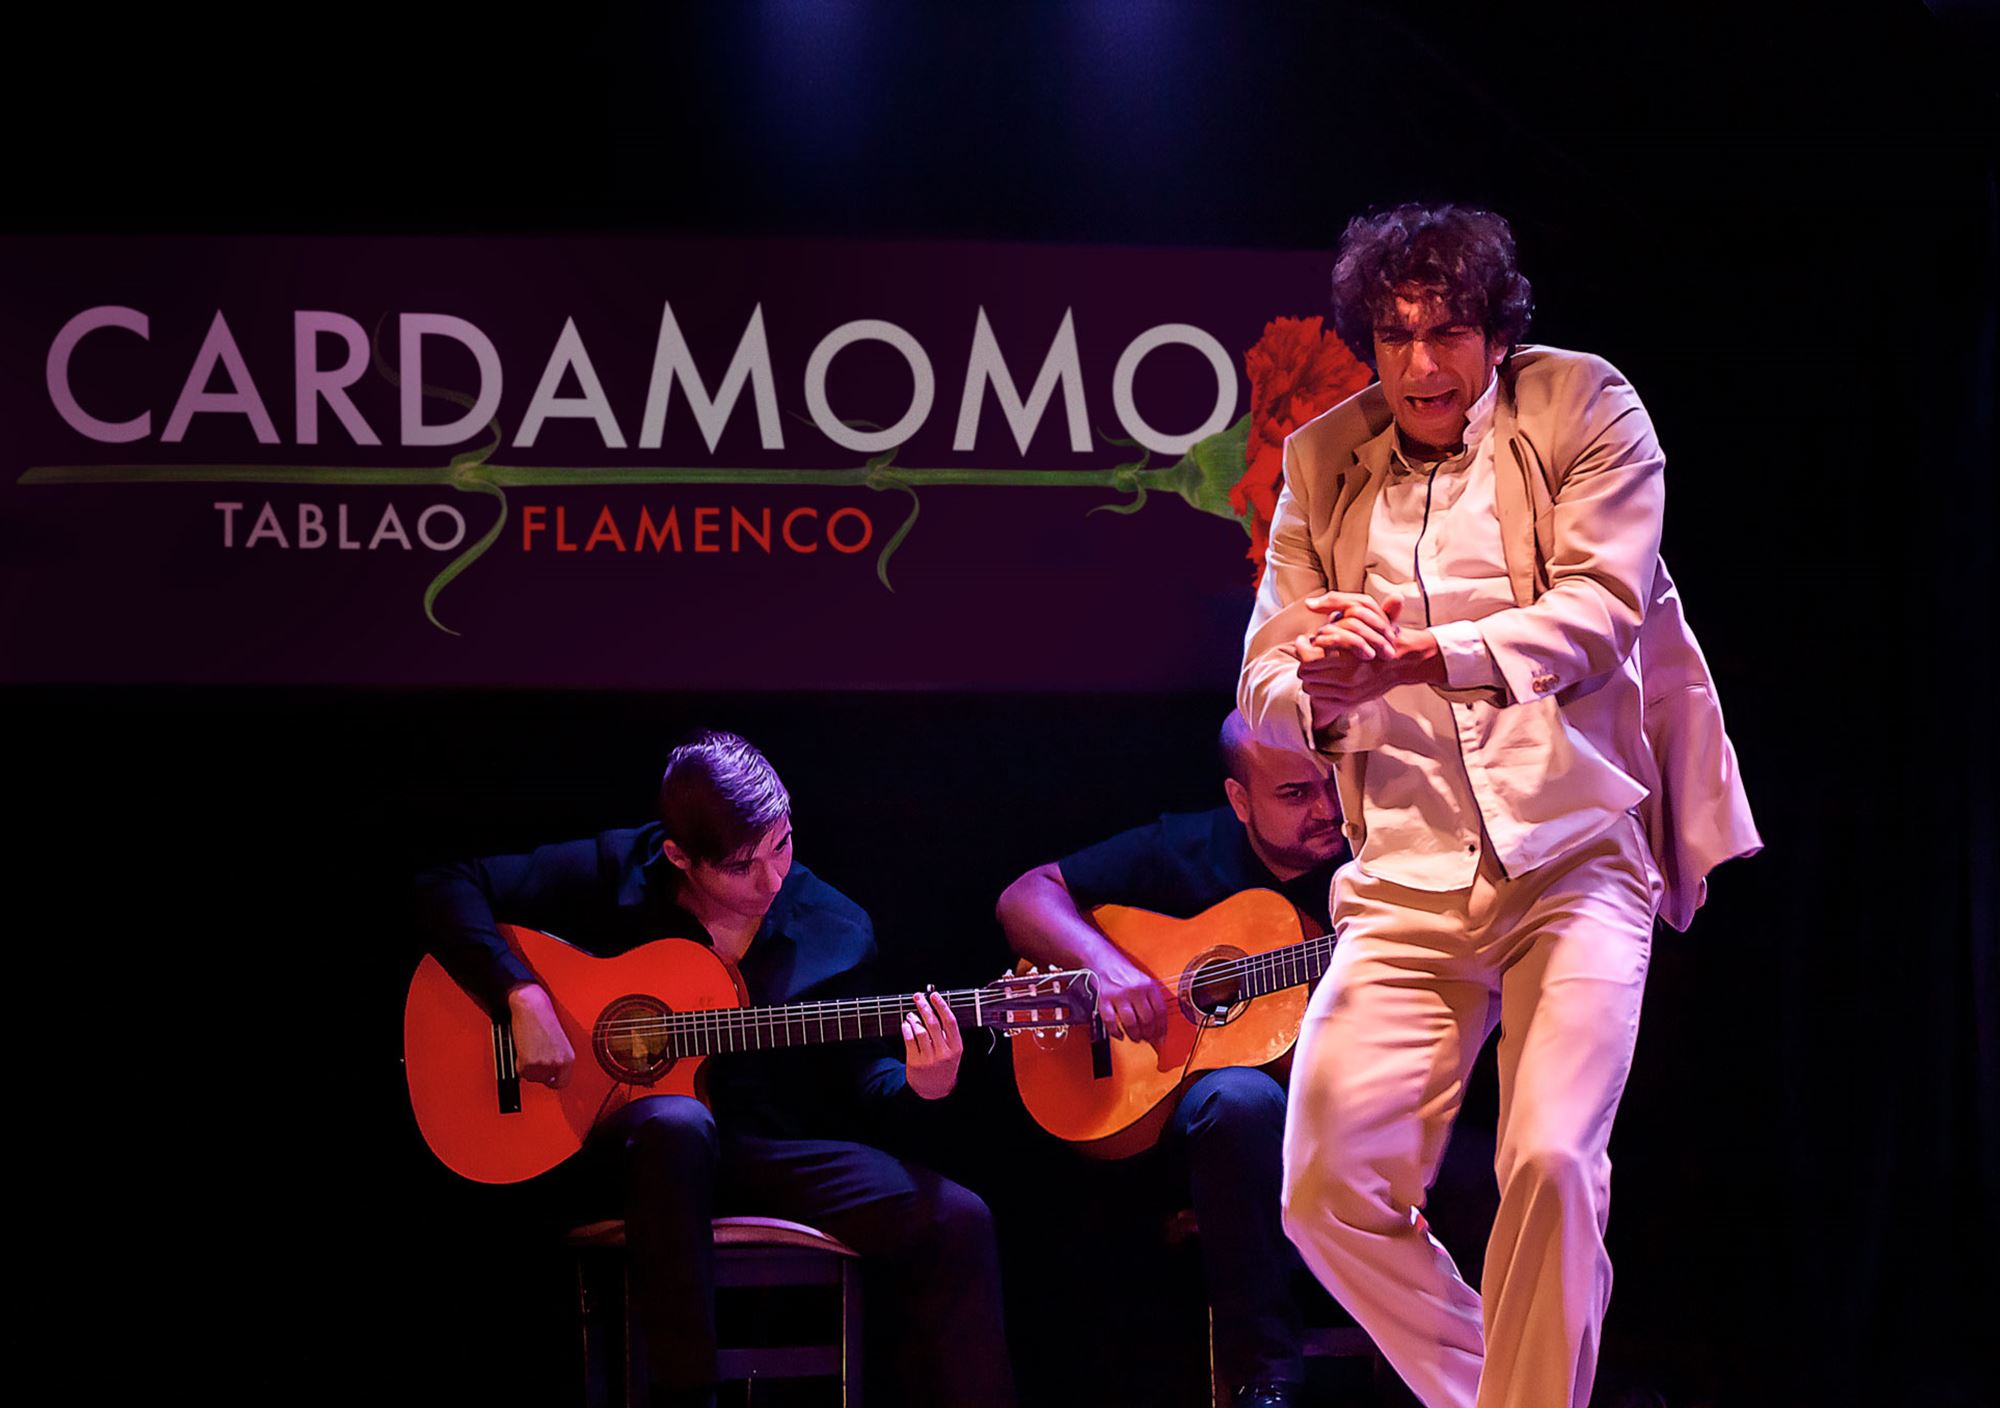 booking tickets Show in Cardamomo Tablao Flamenco Madrid